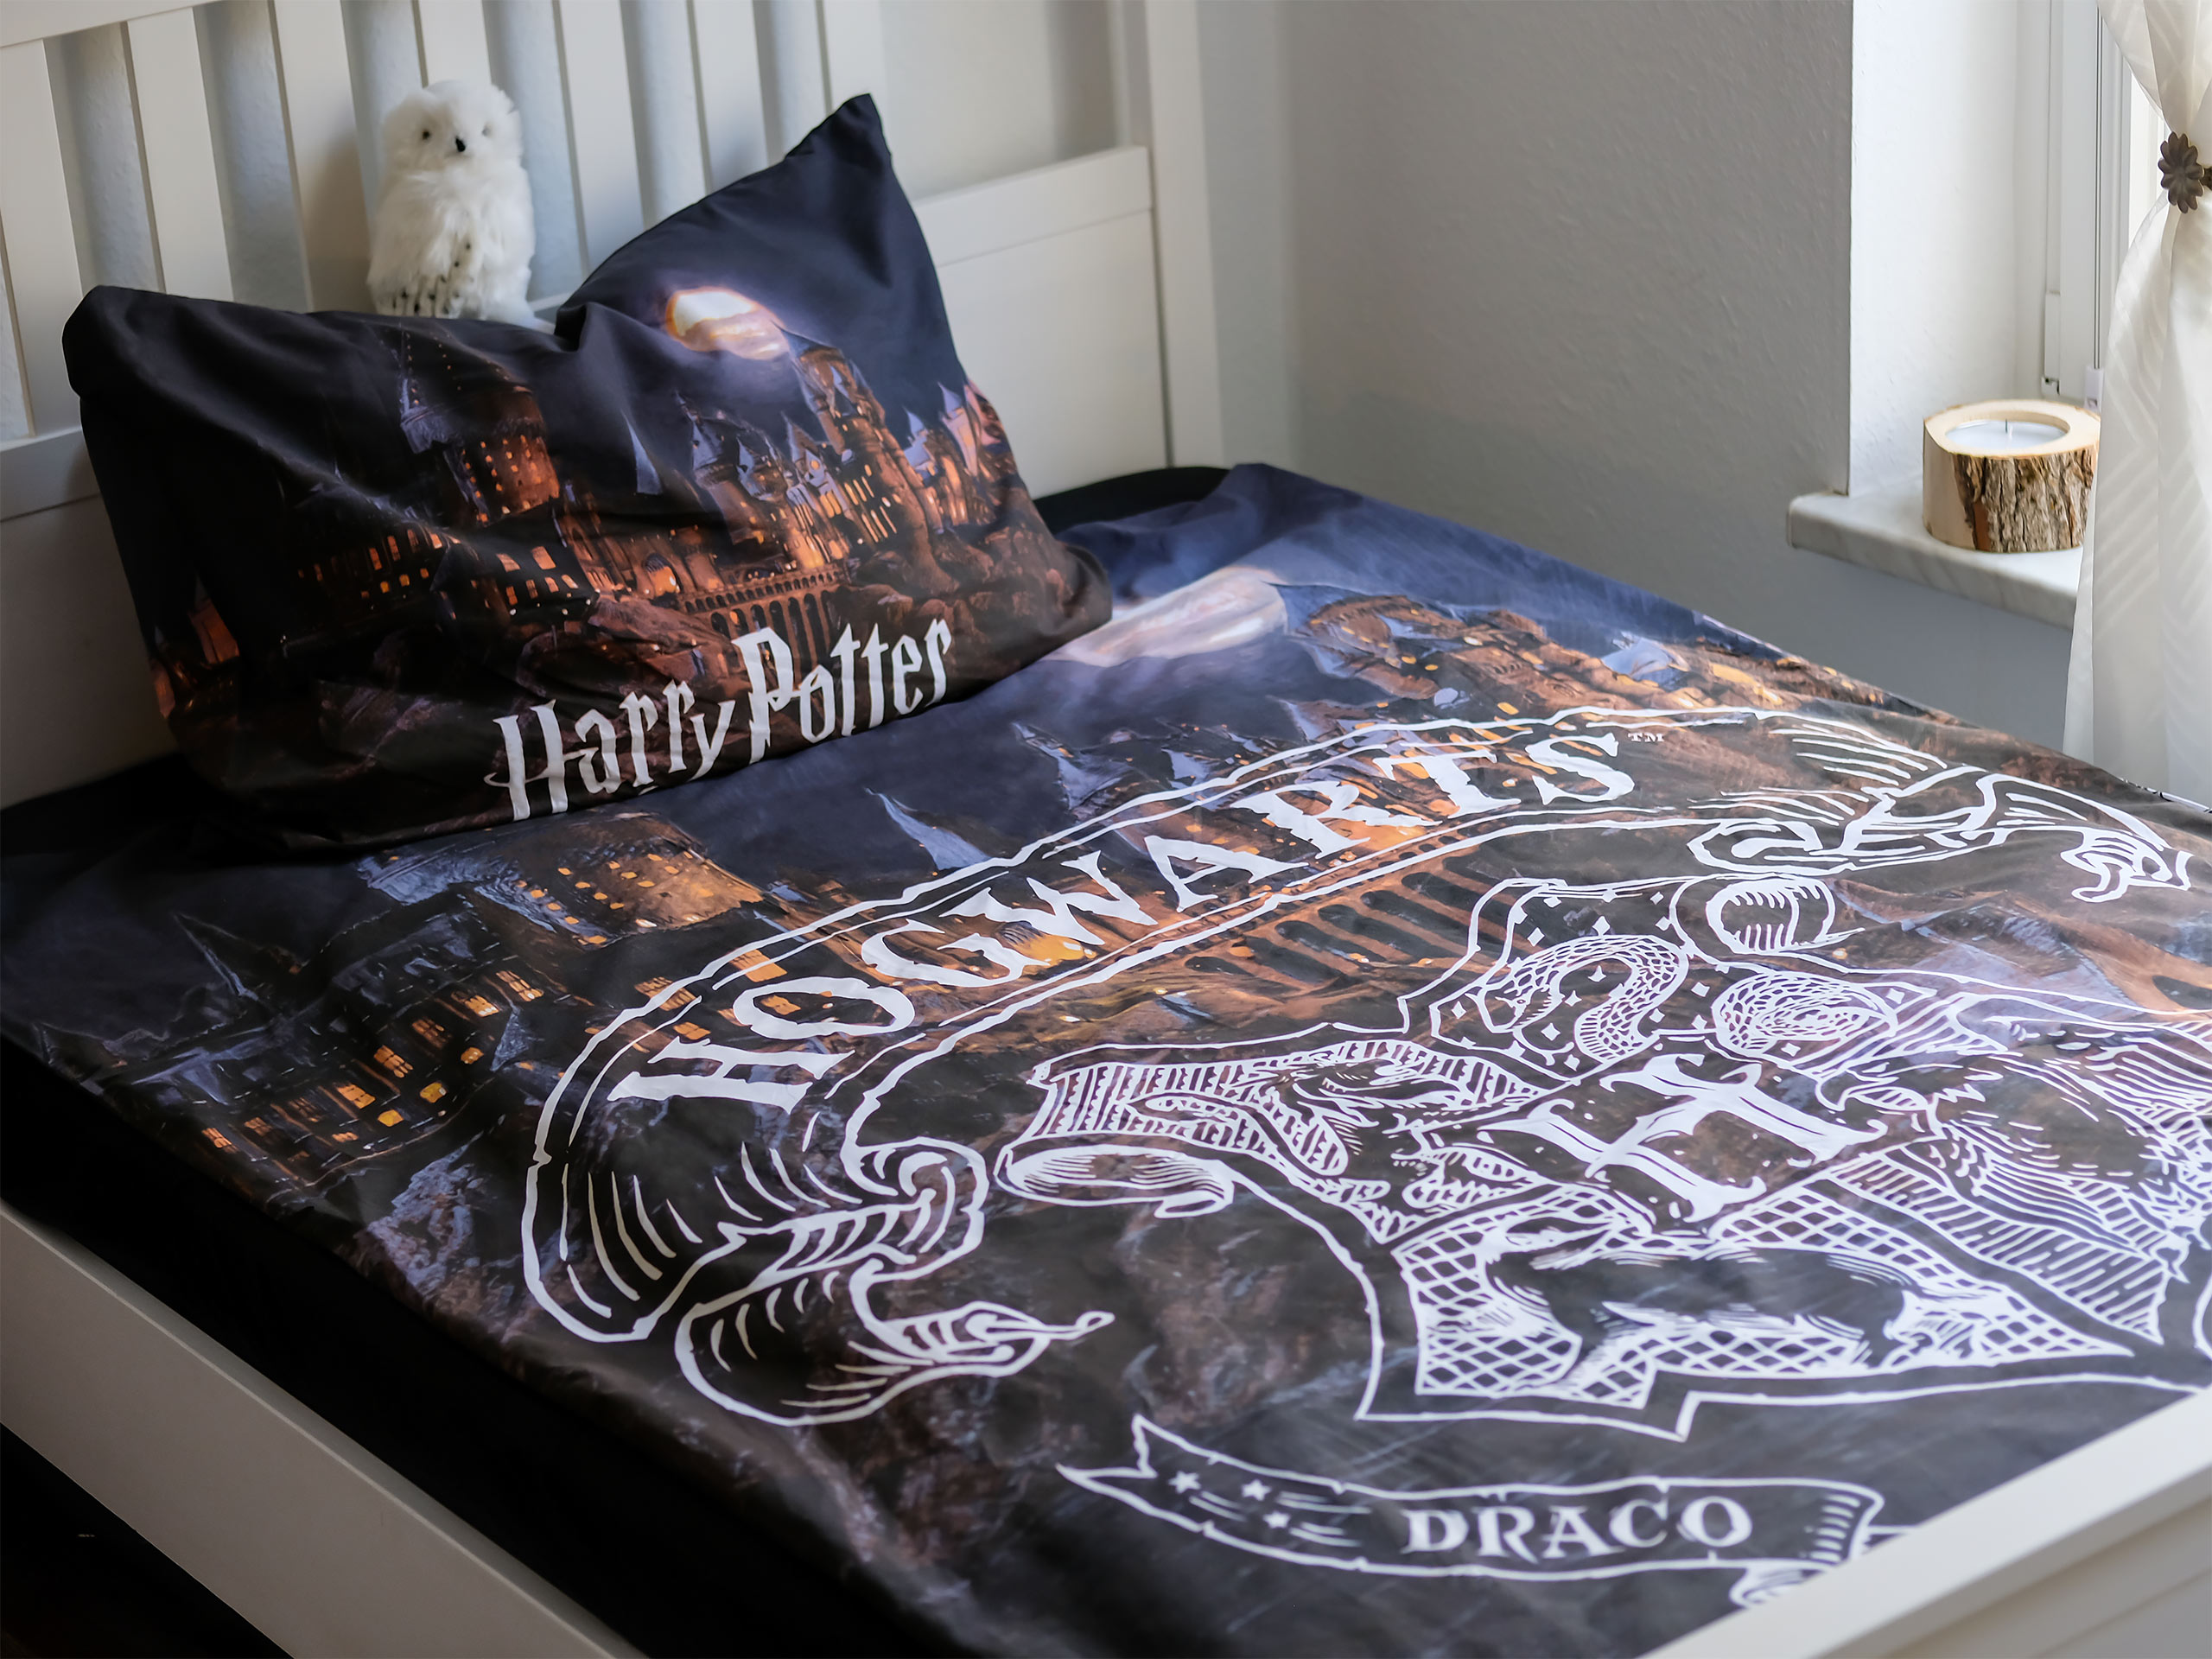 Harry Potter - Hogwarts Kasteel Beddengoed